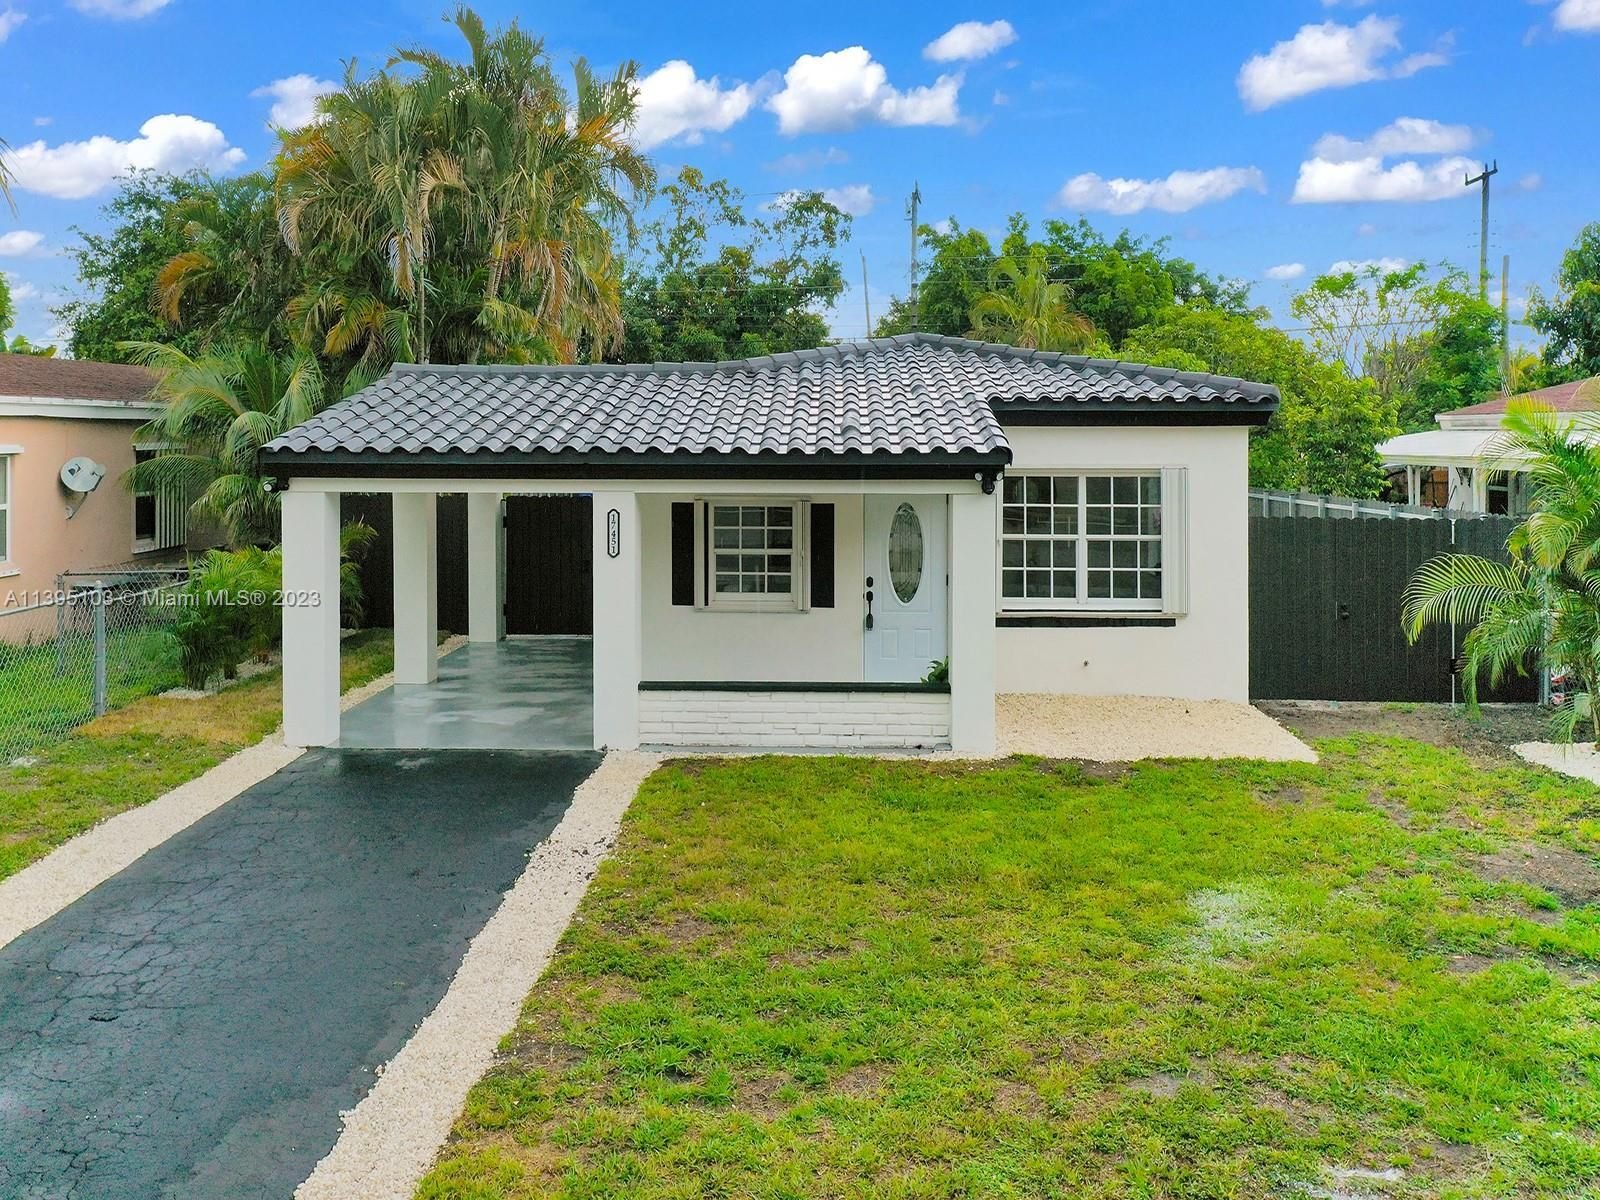 Real estate property located at 17451 19th Ave, Miami-Dade County, North Miami Beach, FL